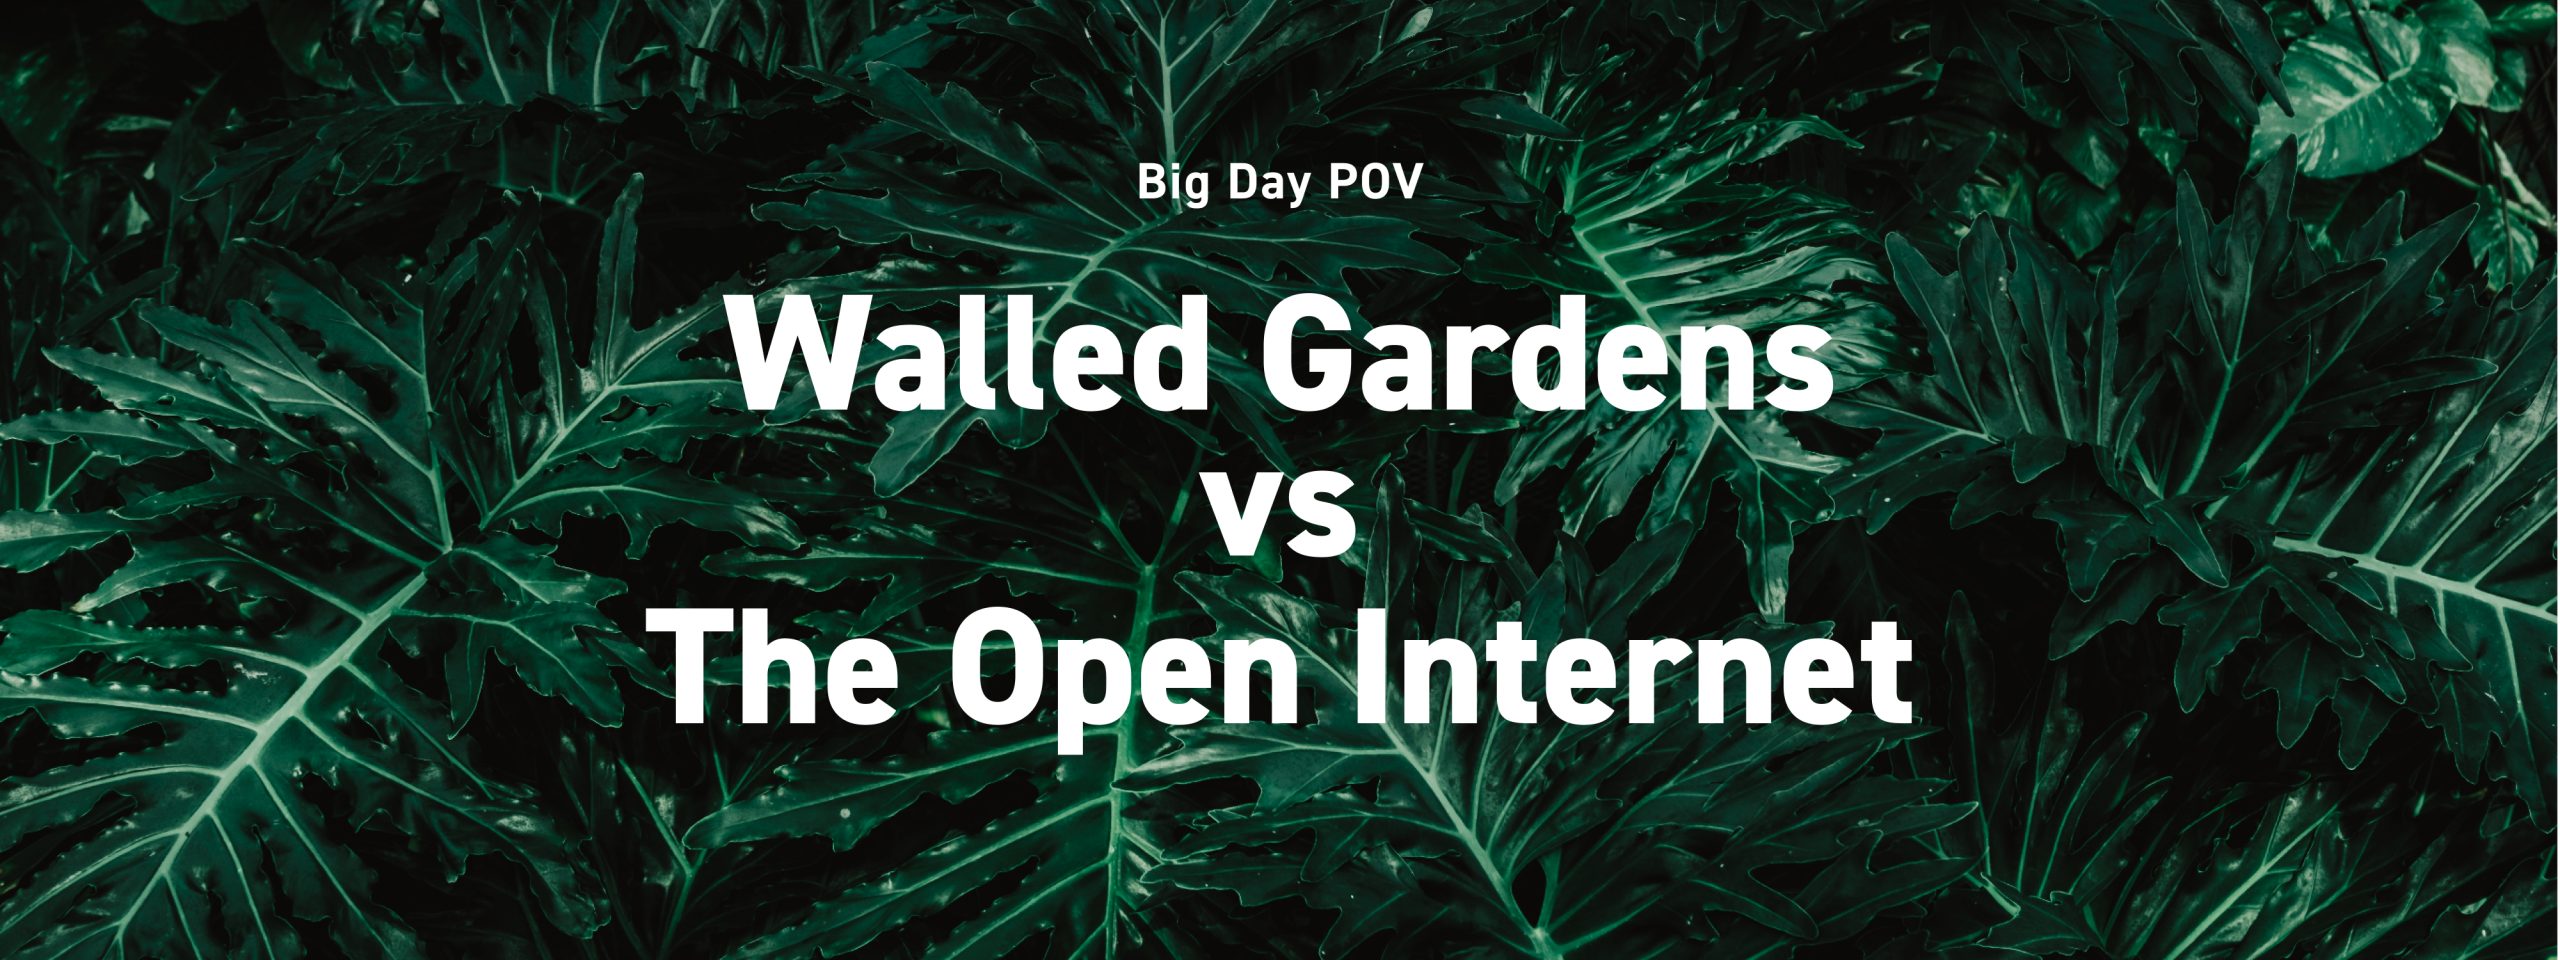 Walled Gardens Versus The Open Internet